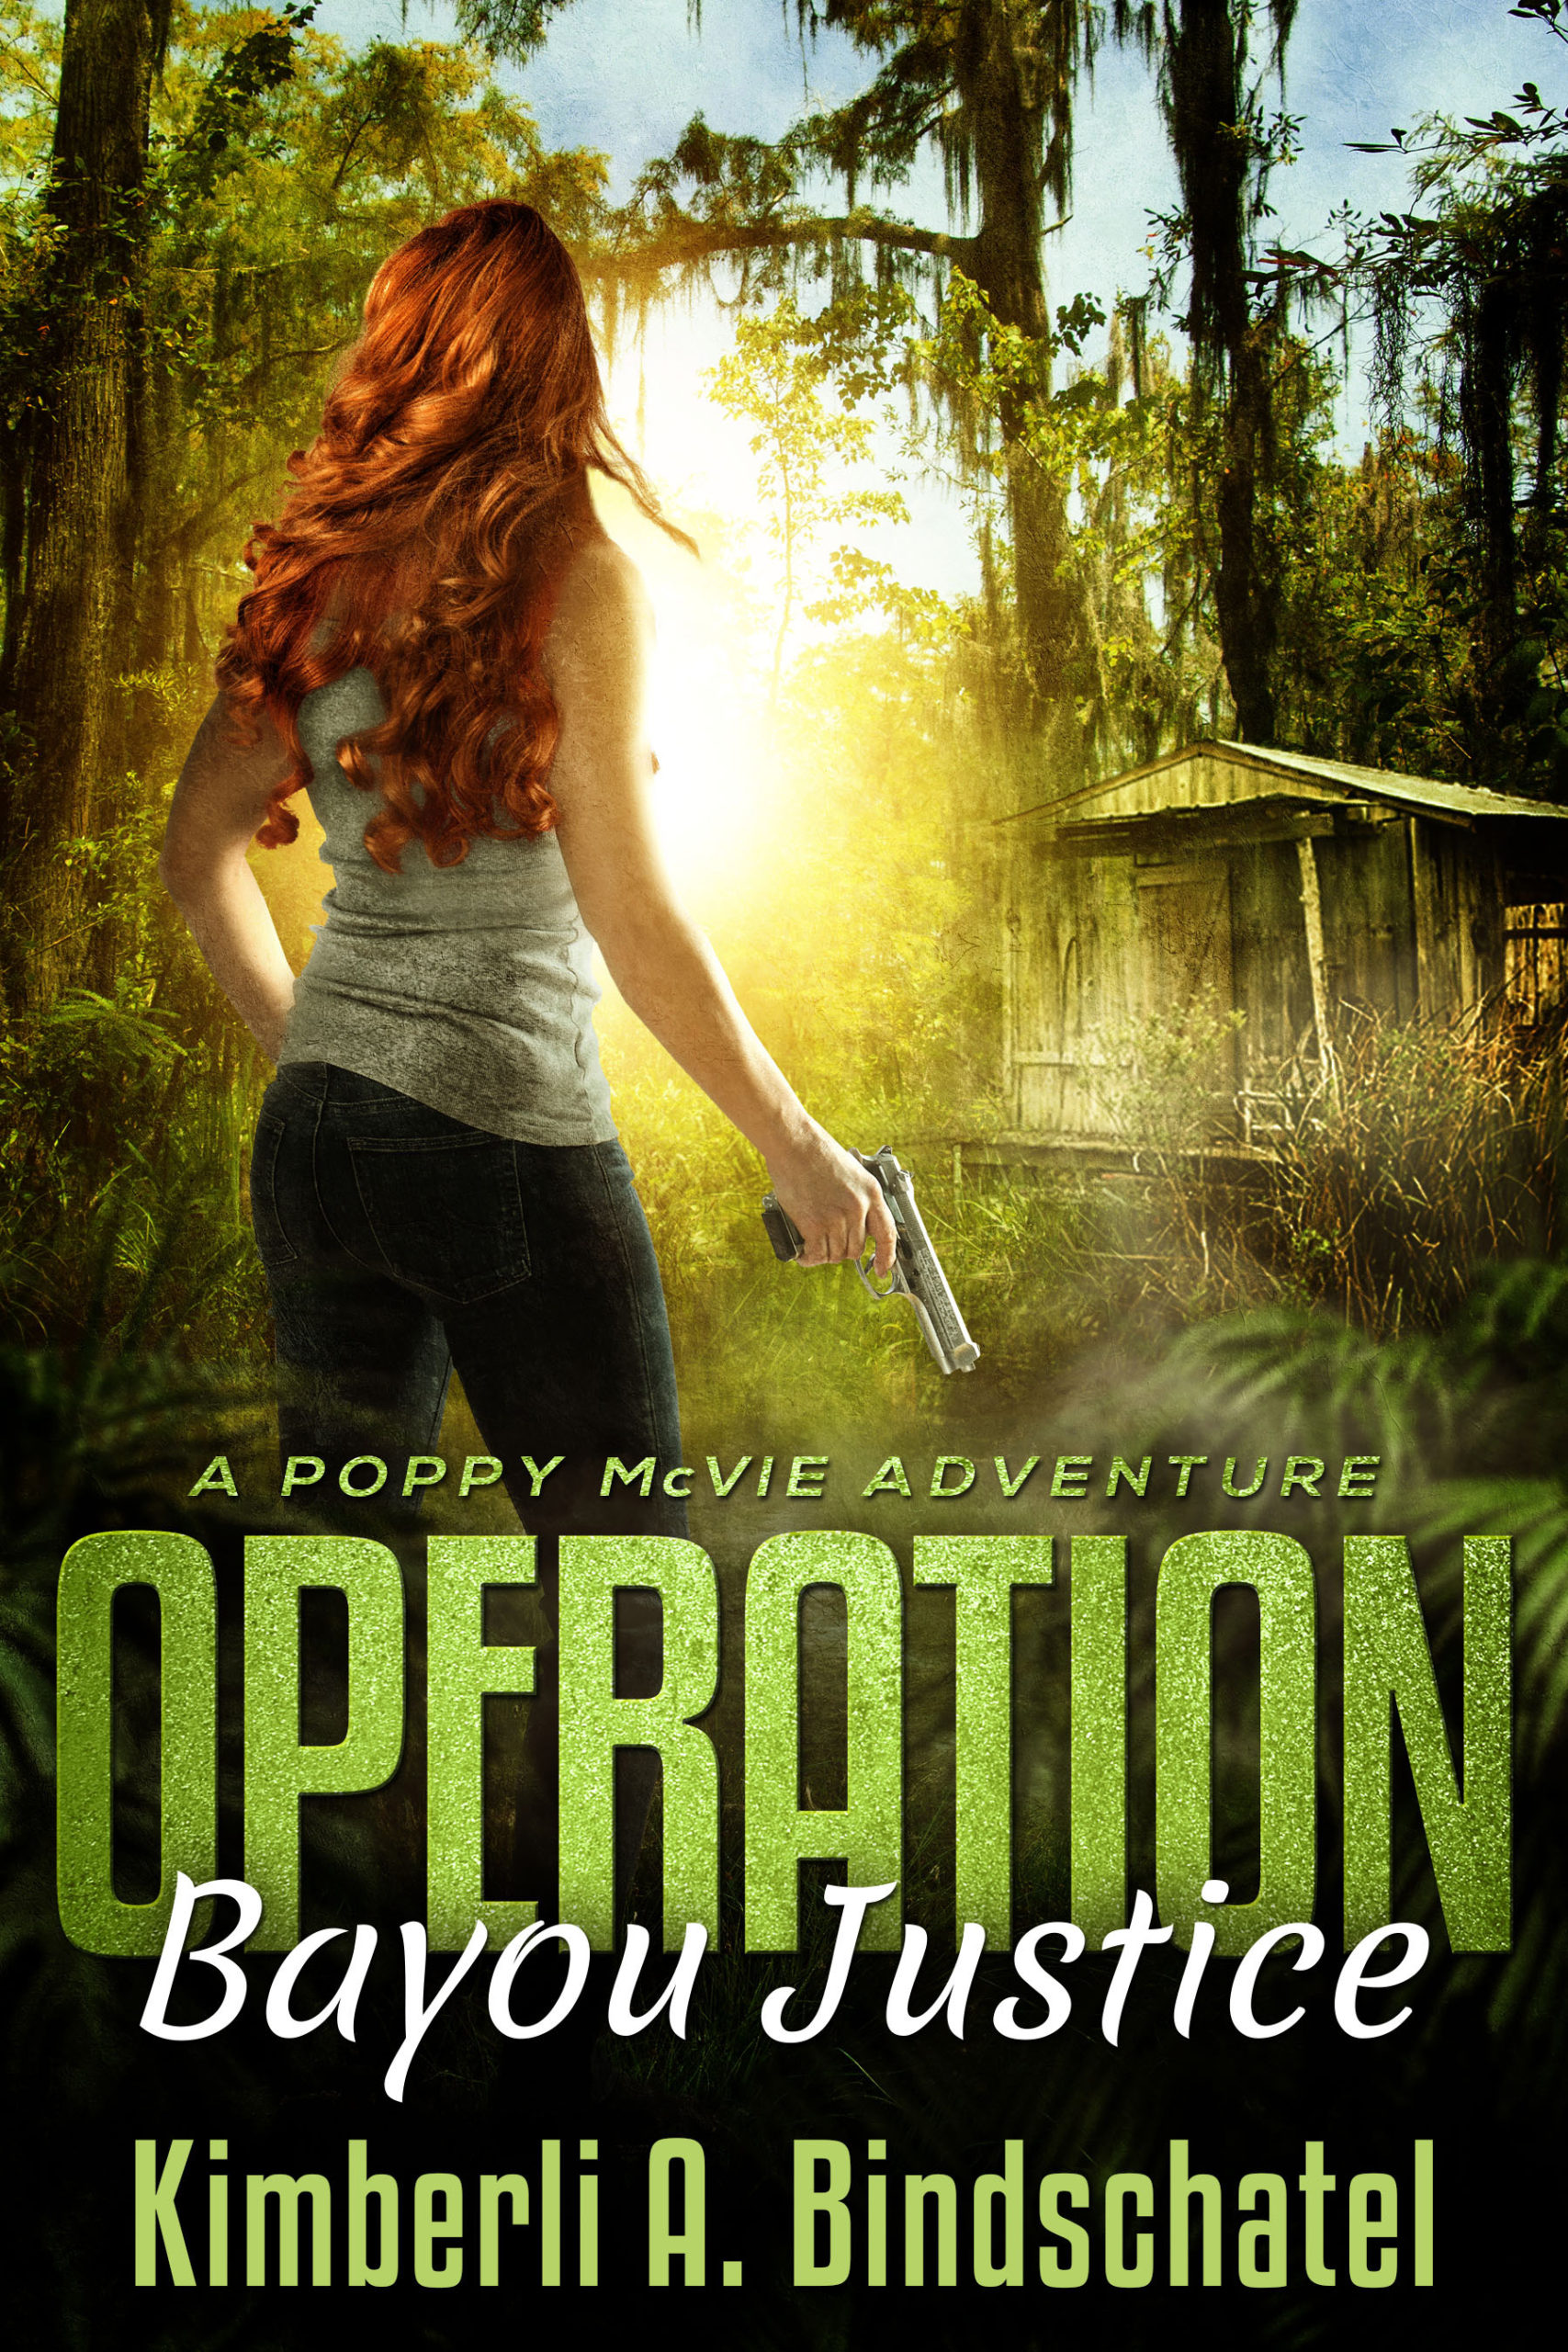 Operation Bayou Justice: A Poppy McVie Adventure